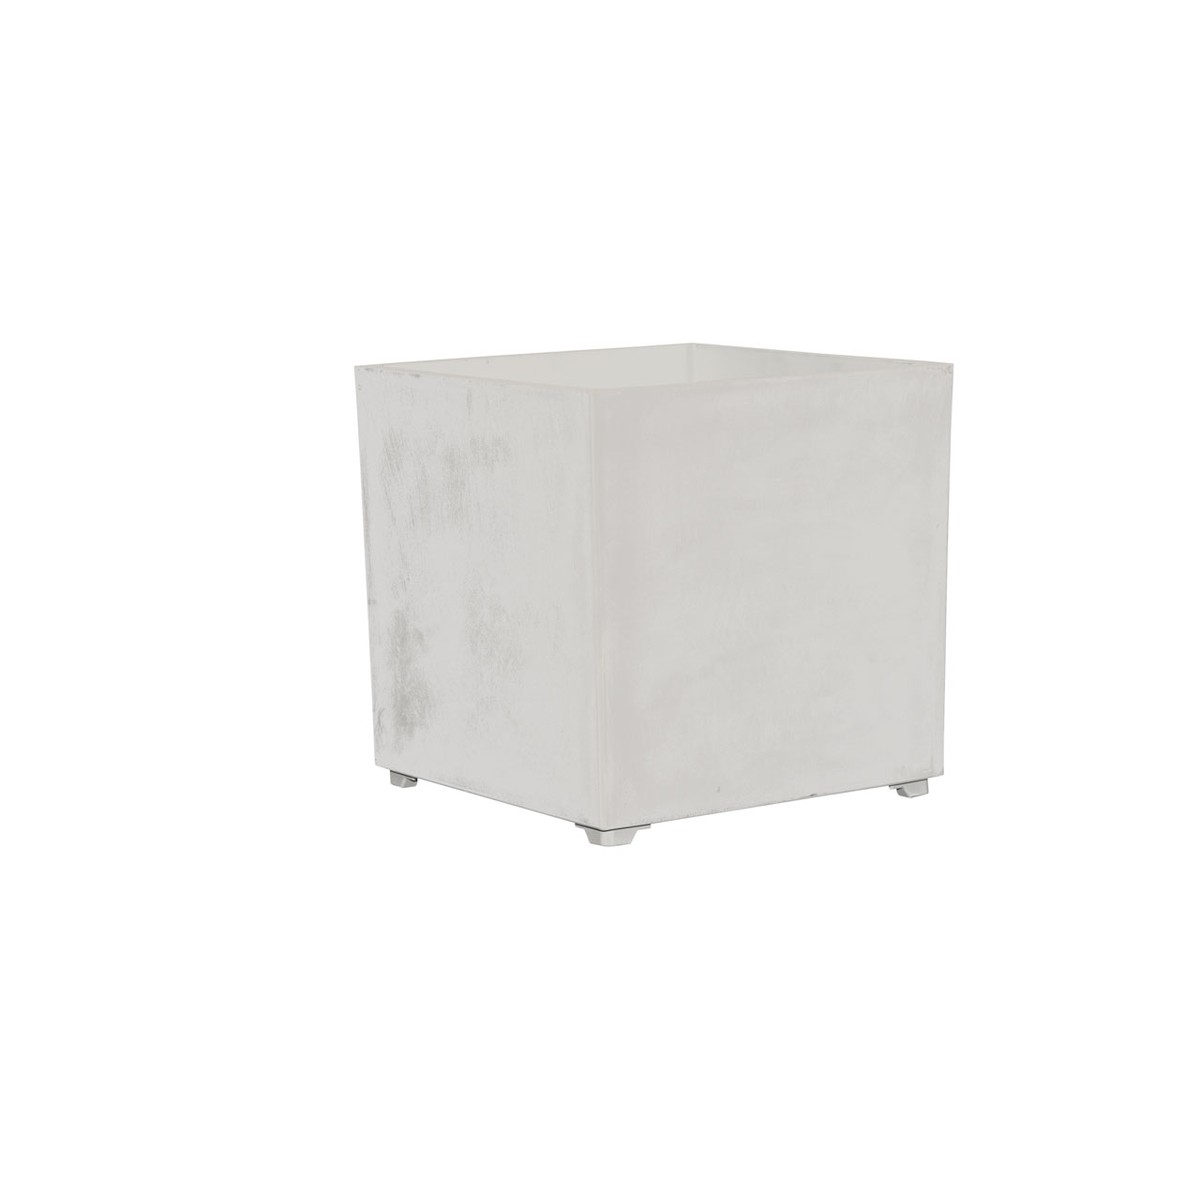  NOVA VITA Pot cubique 40x40 sans trous Artplast Blanc albâtre 400x400x400mm 50L